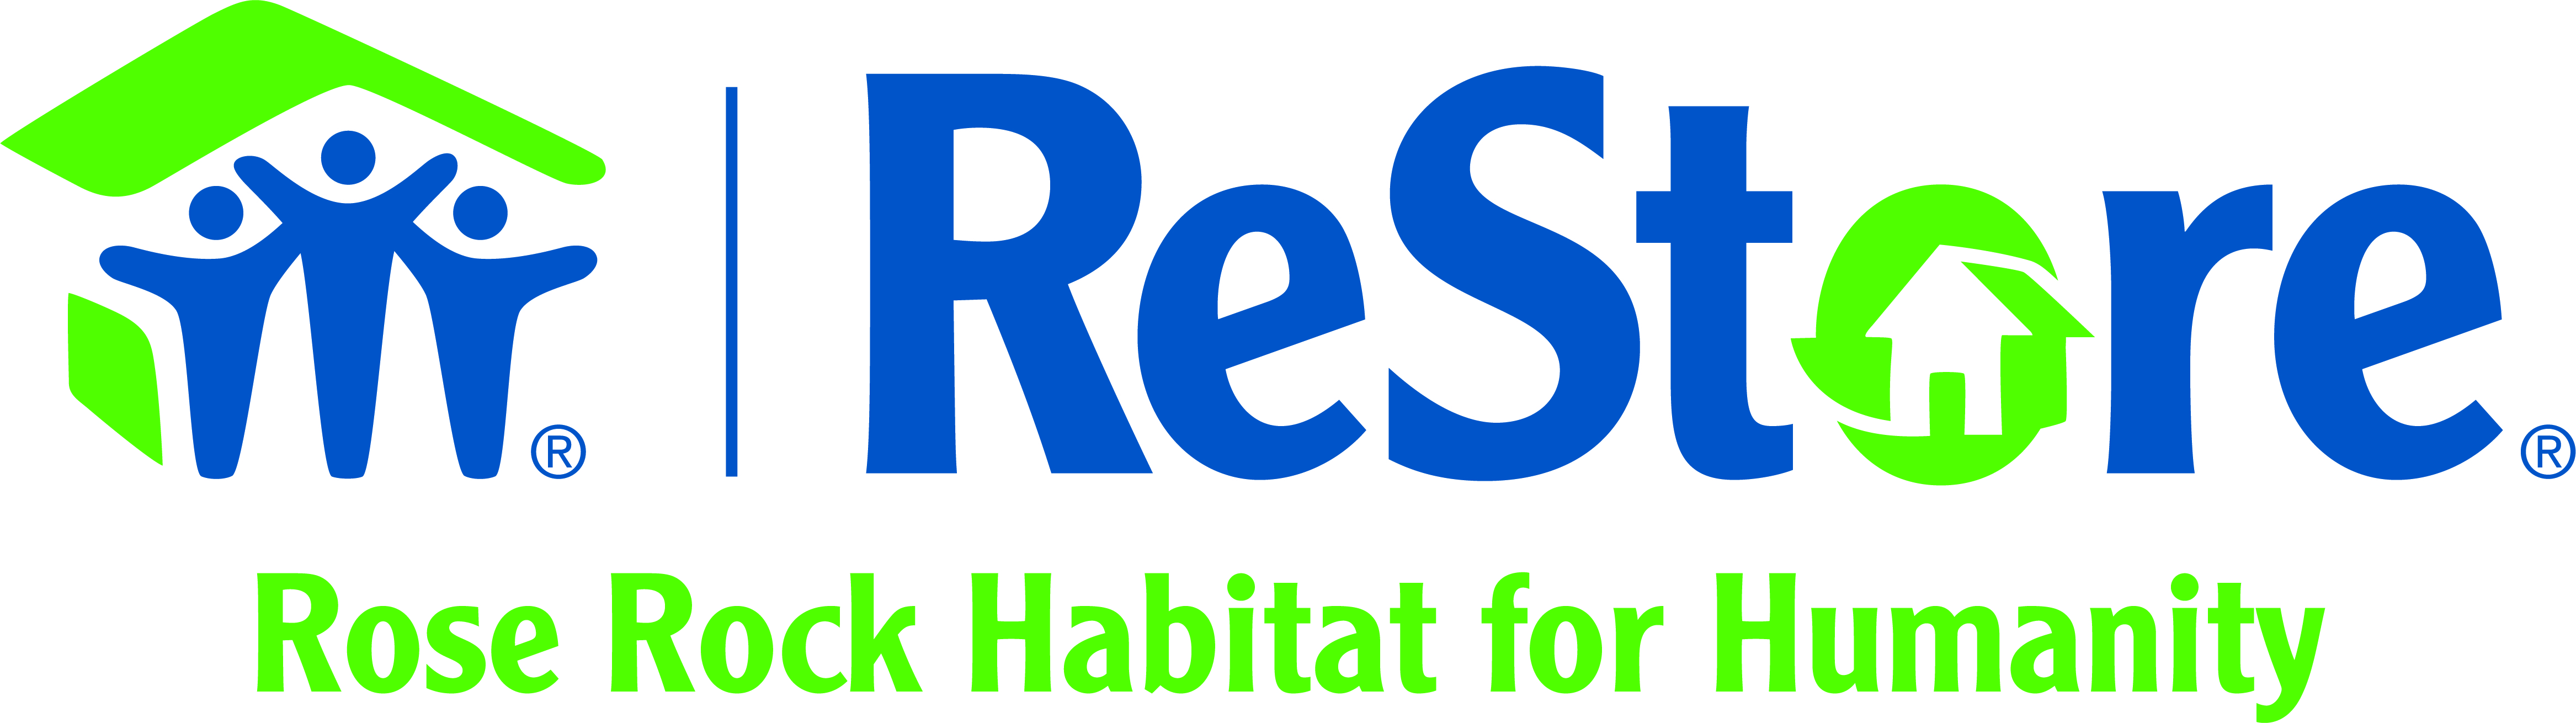 Rose Rock Habitat for Humanity